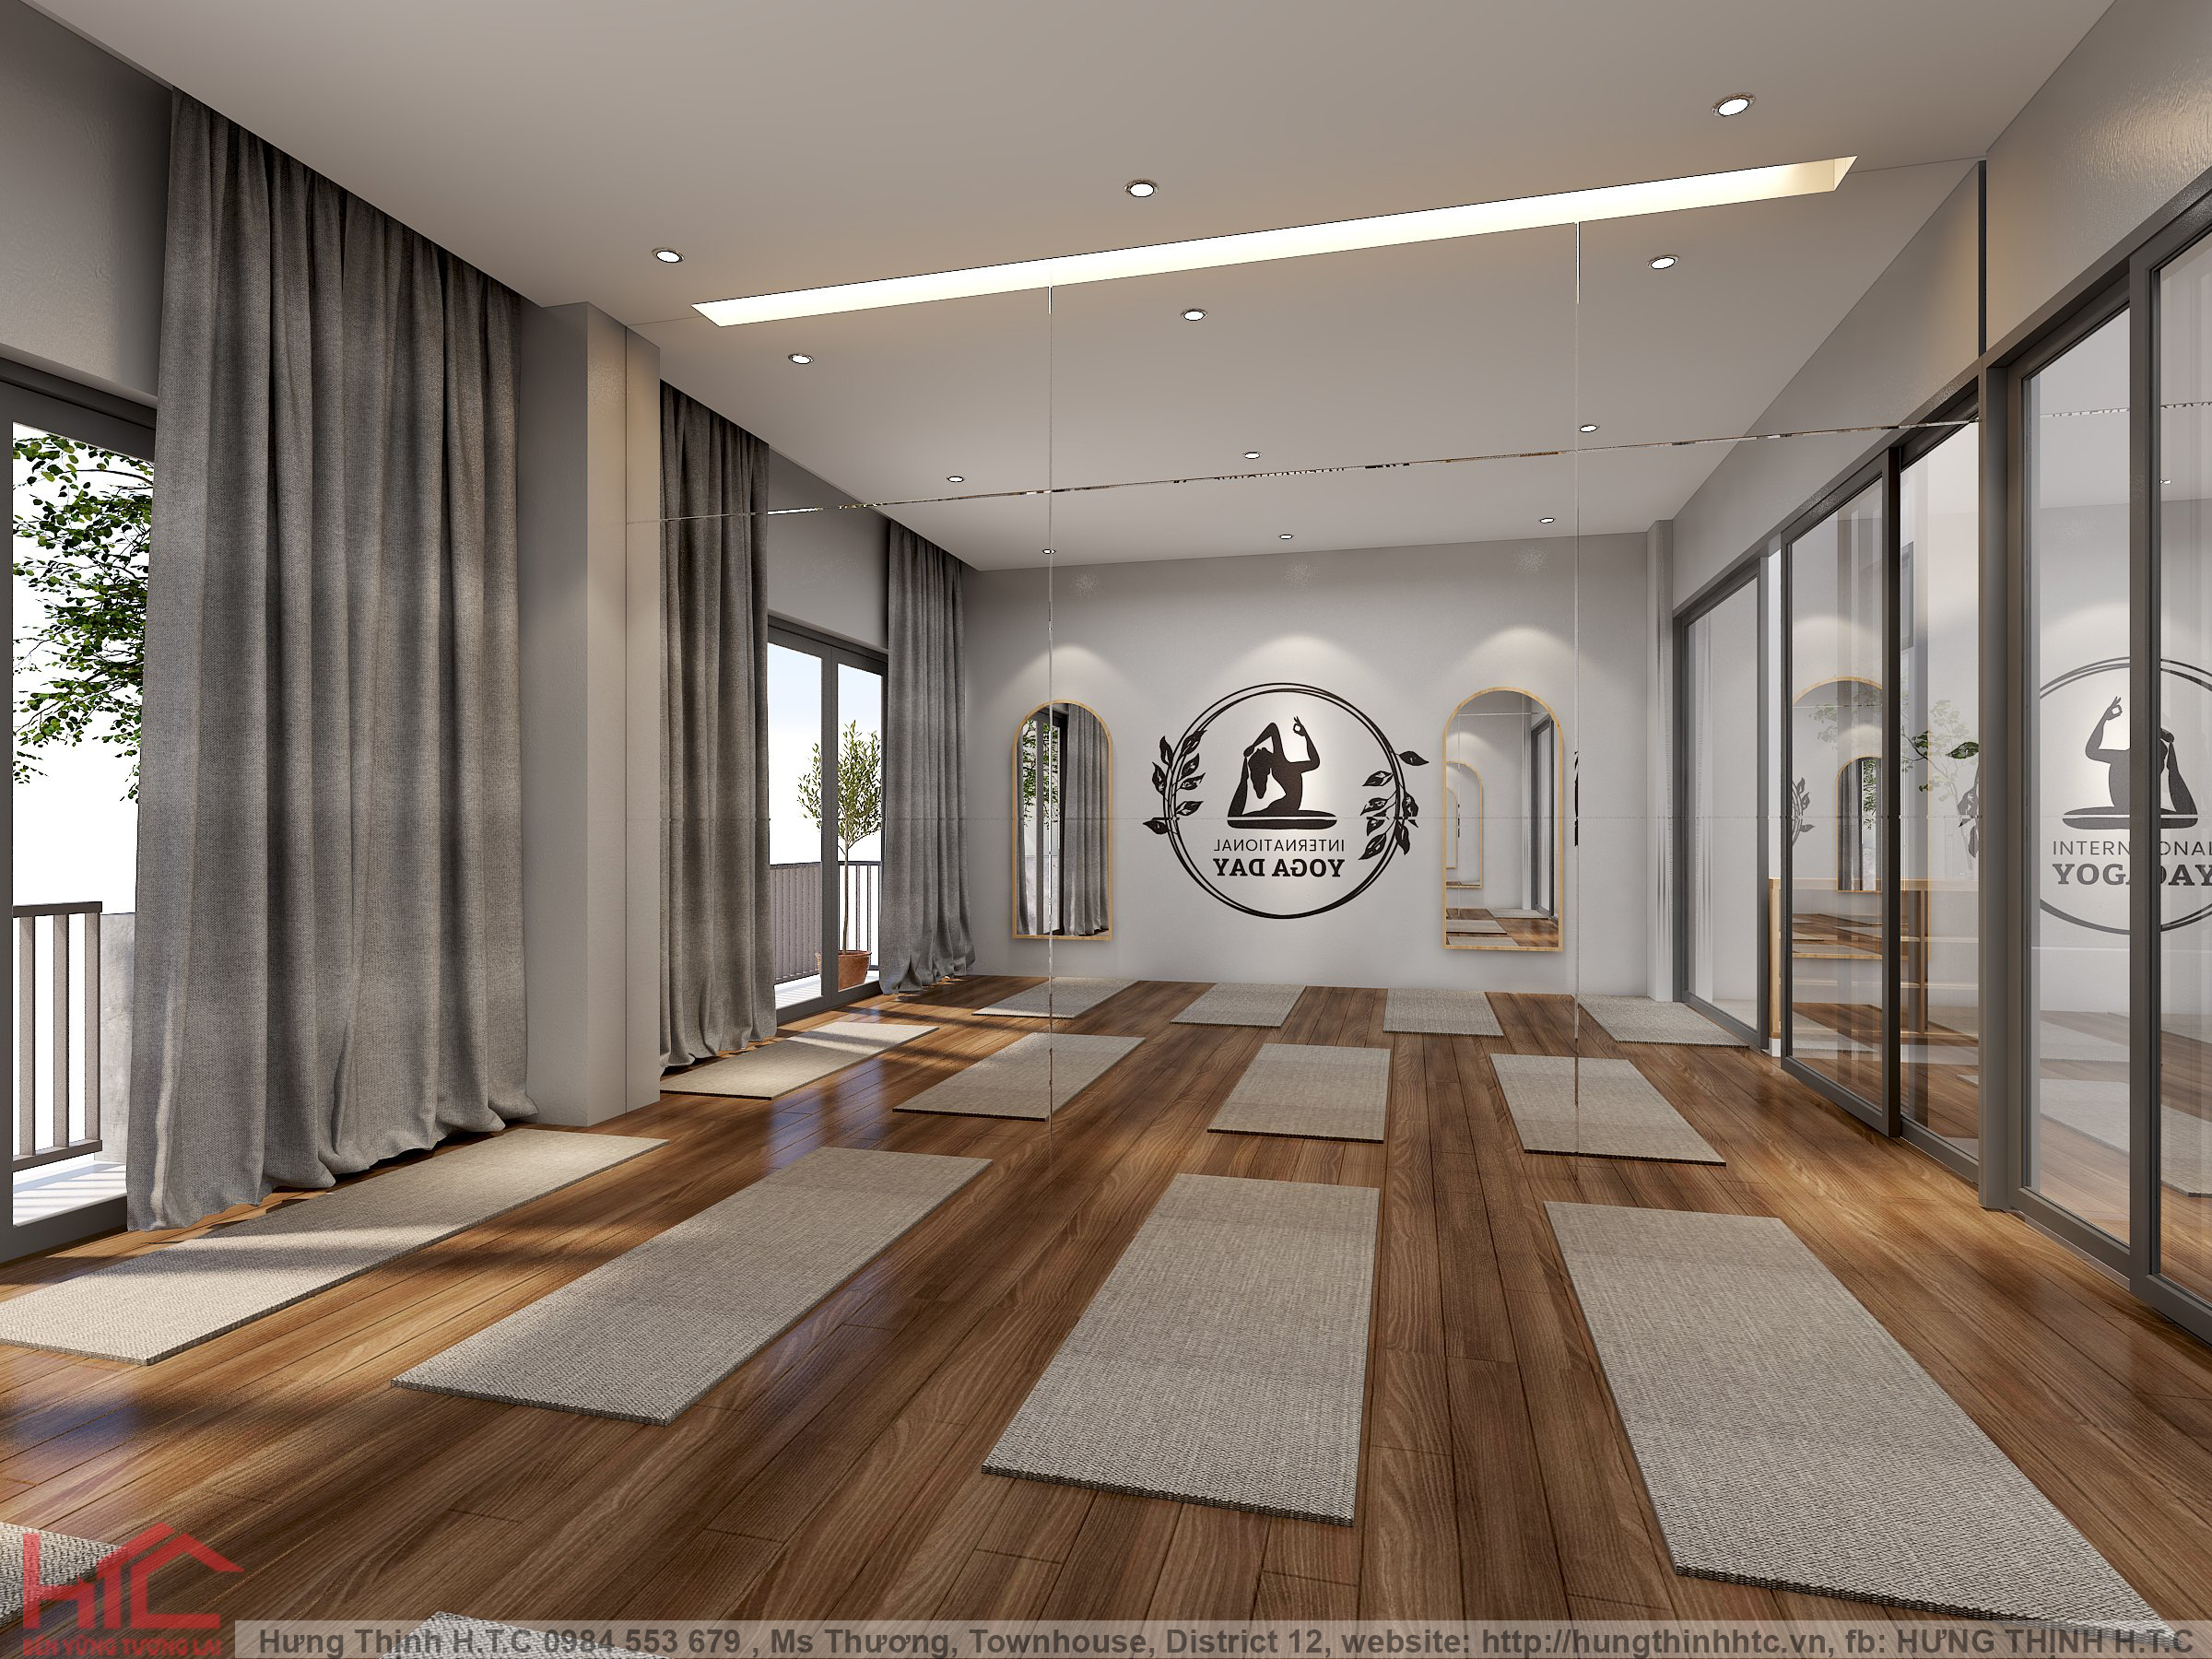 Yoga room 01